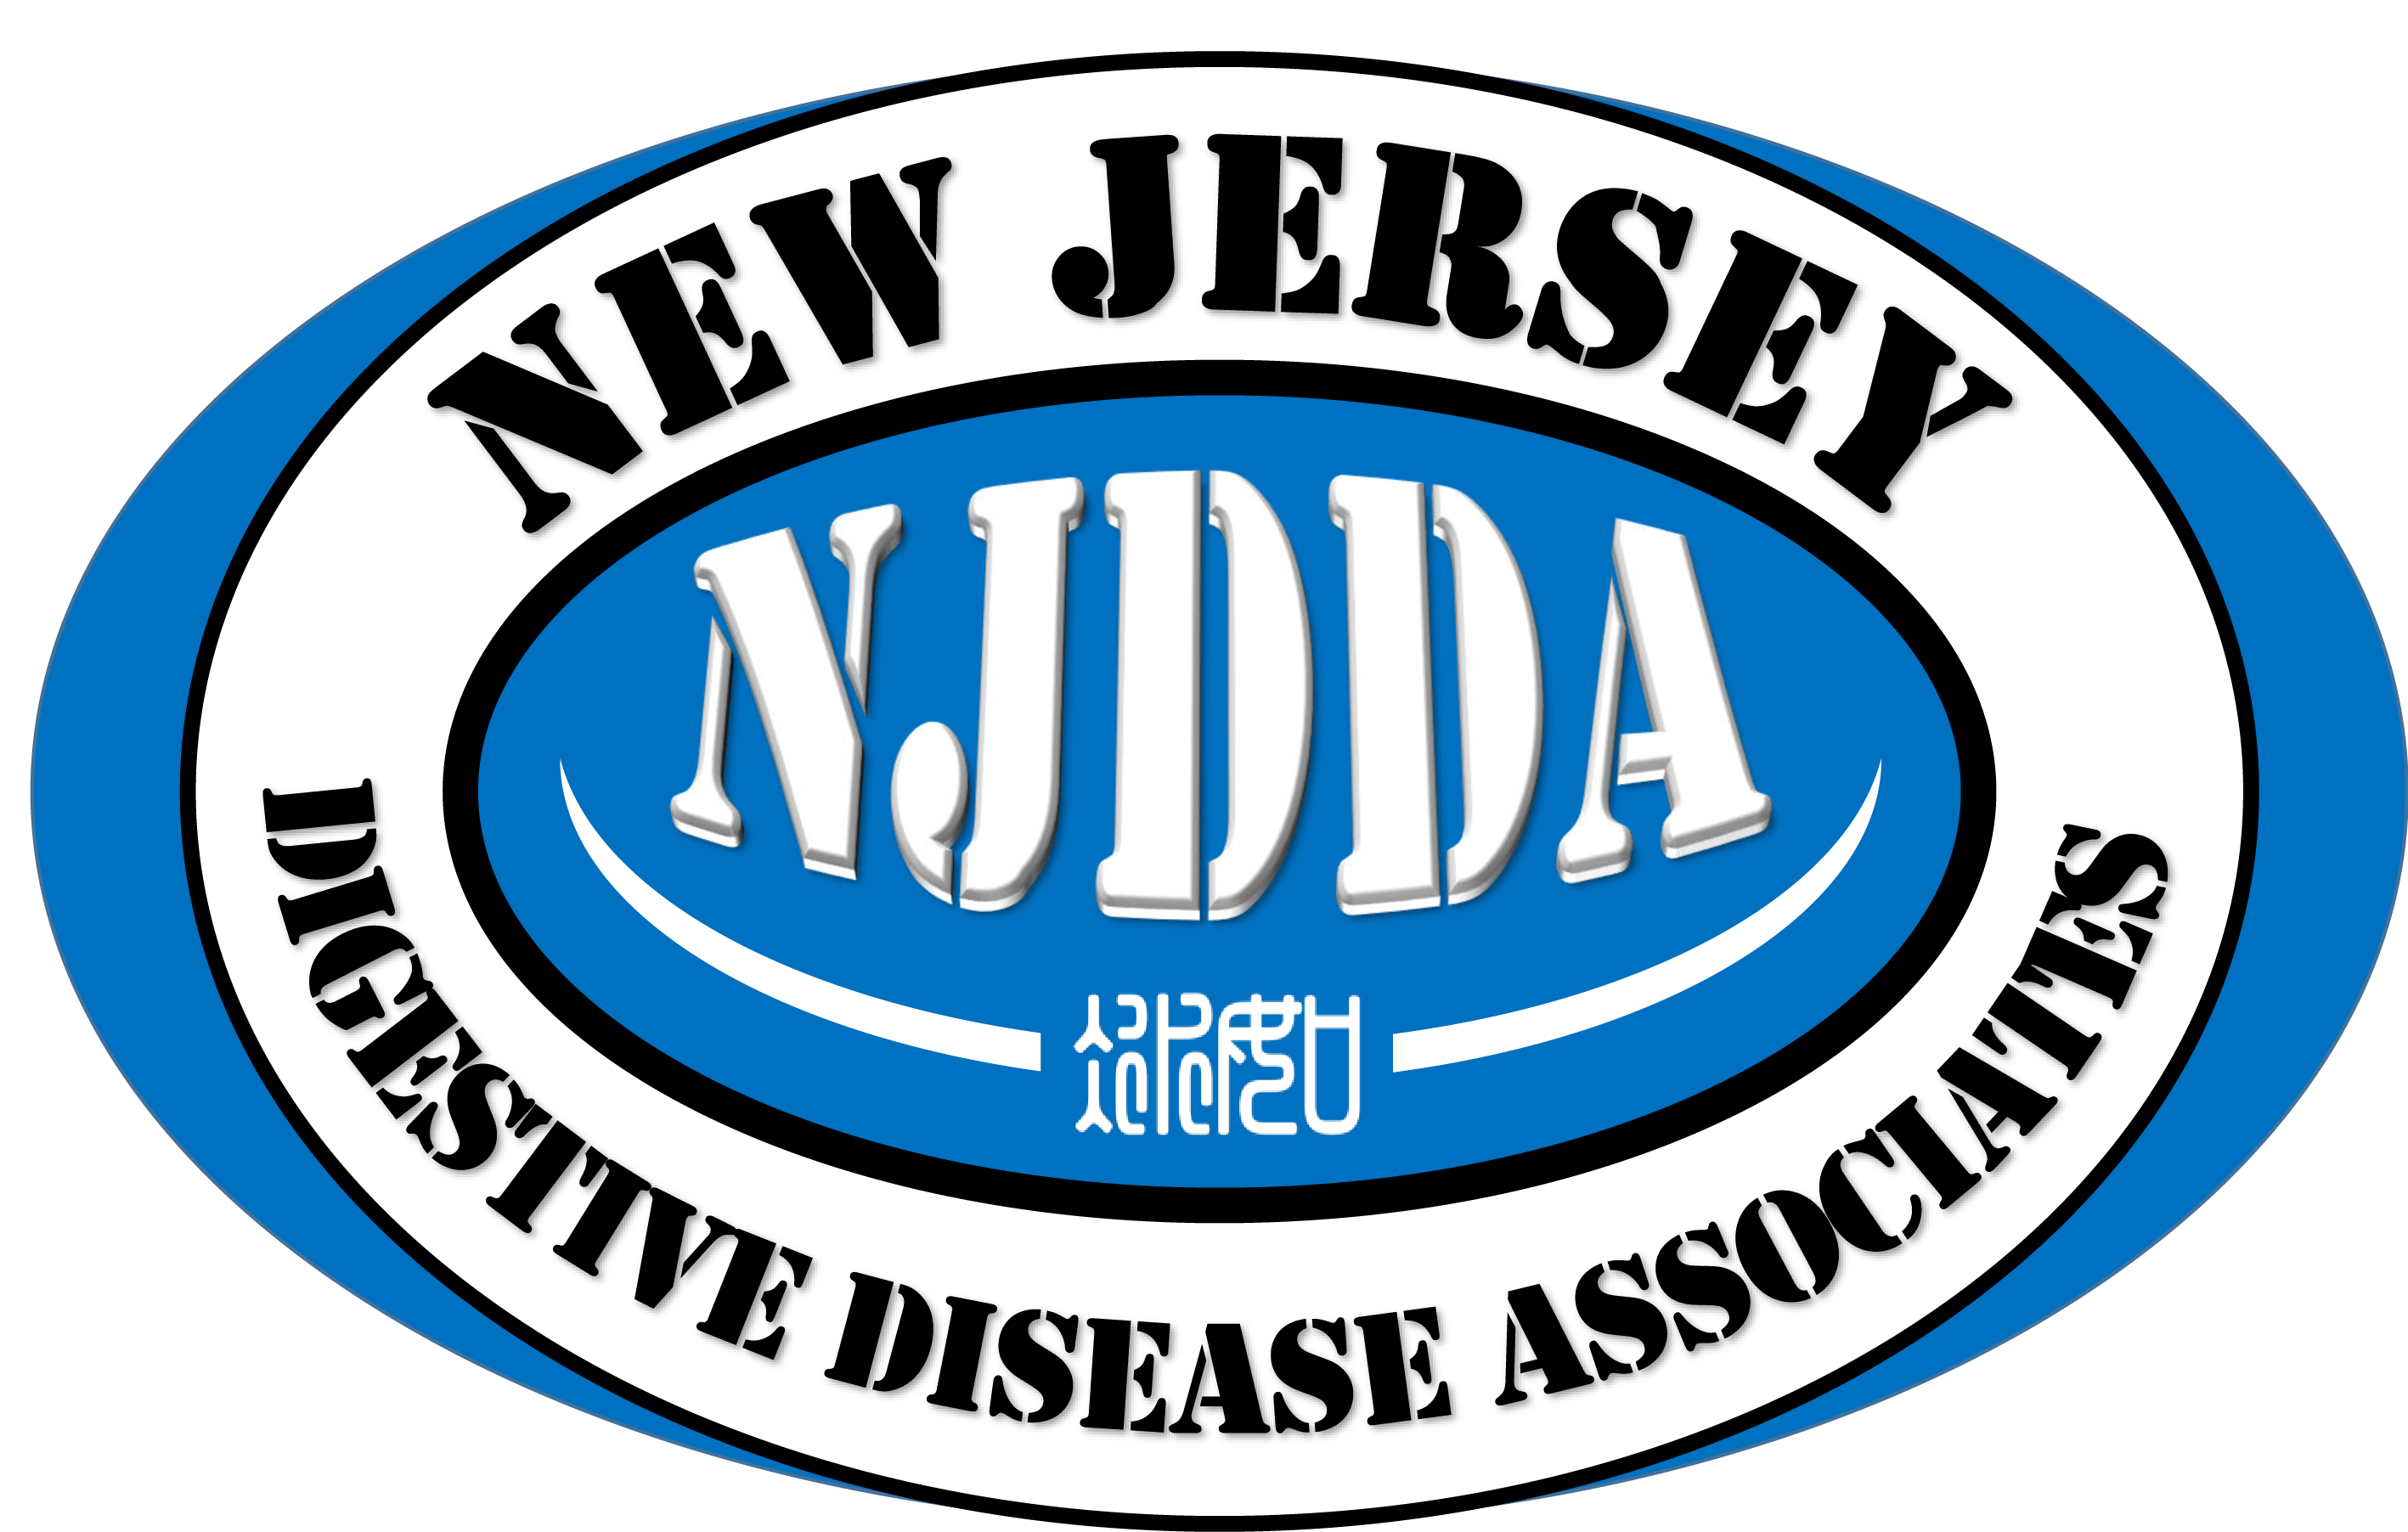 Contact New Jersey Digestive Disease Associates